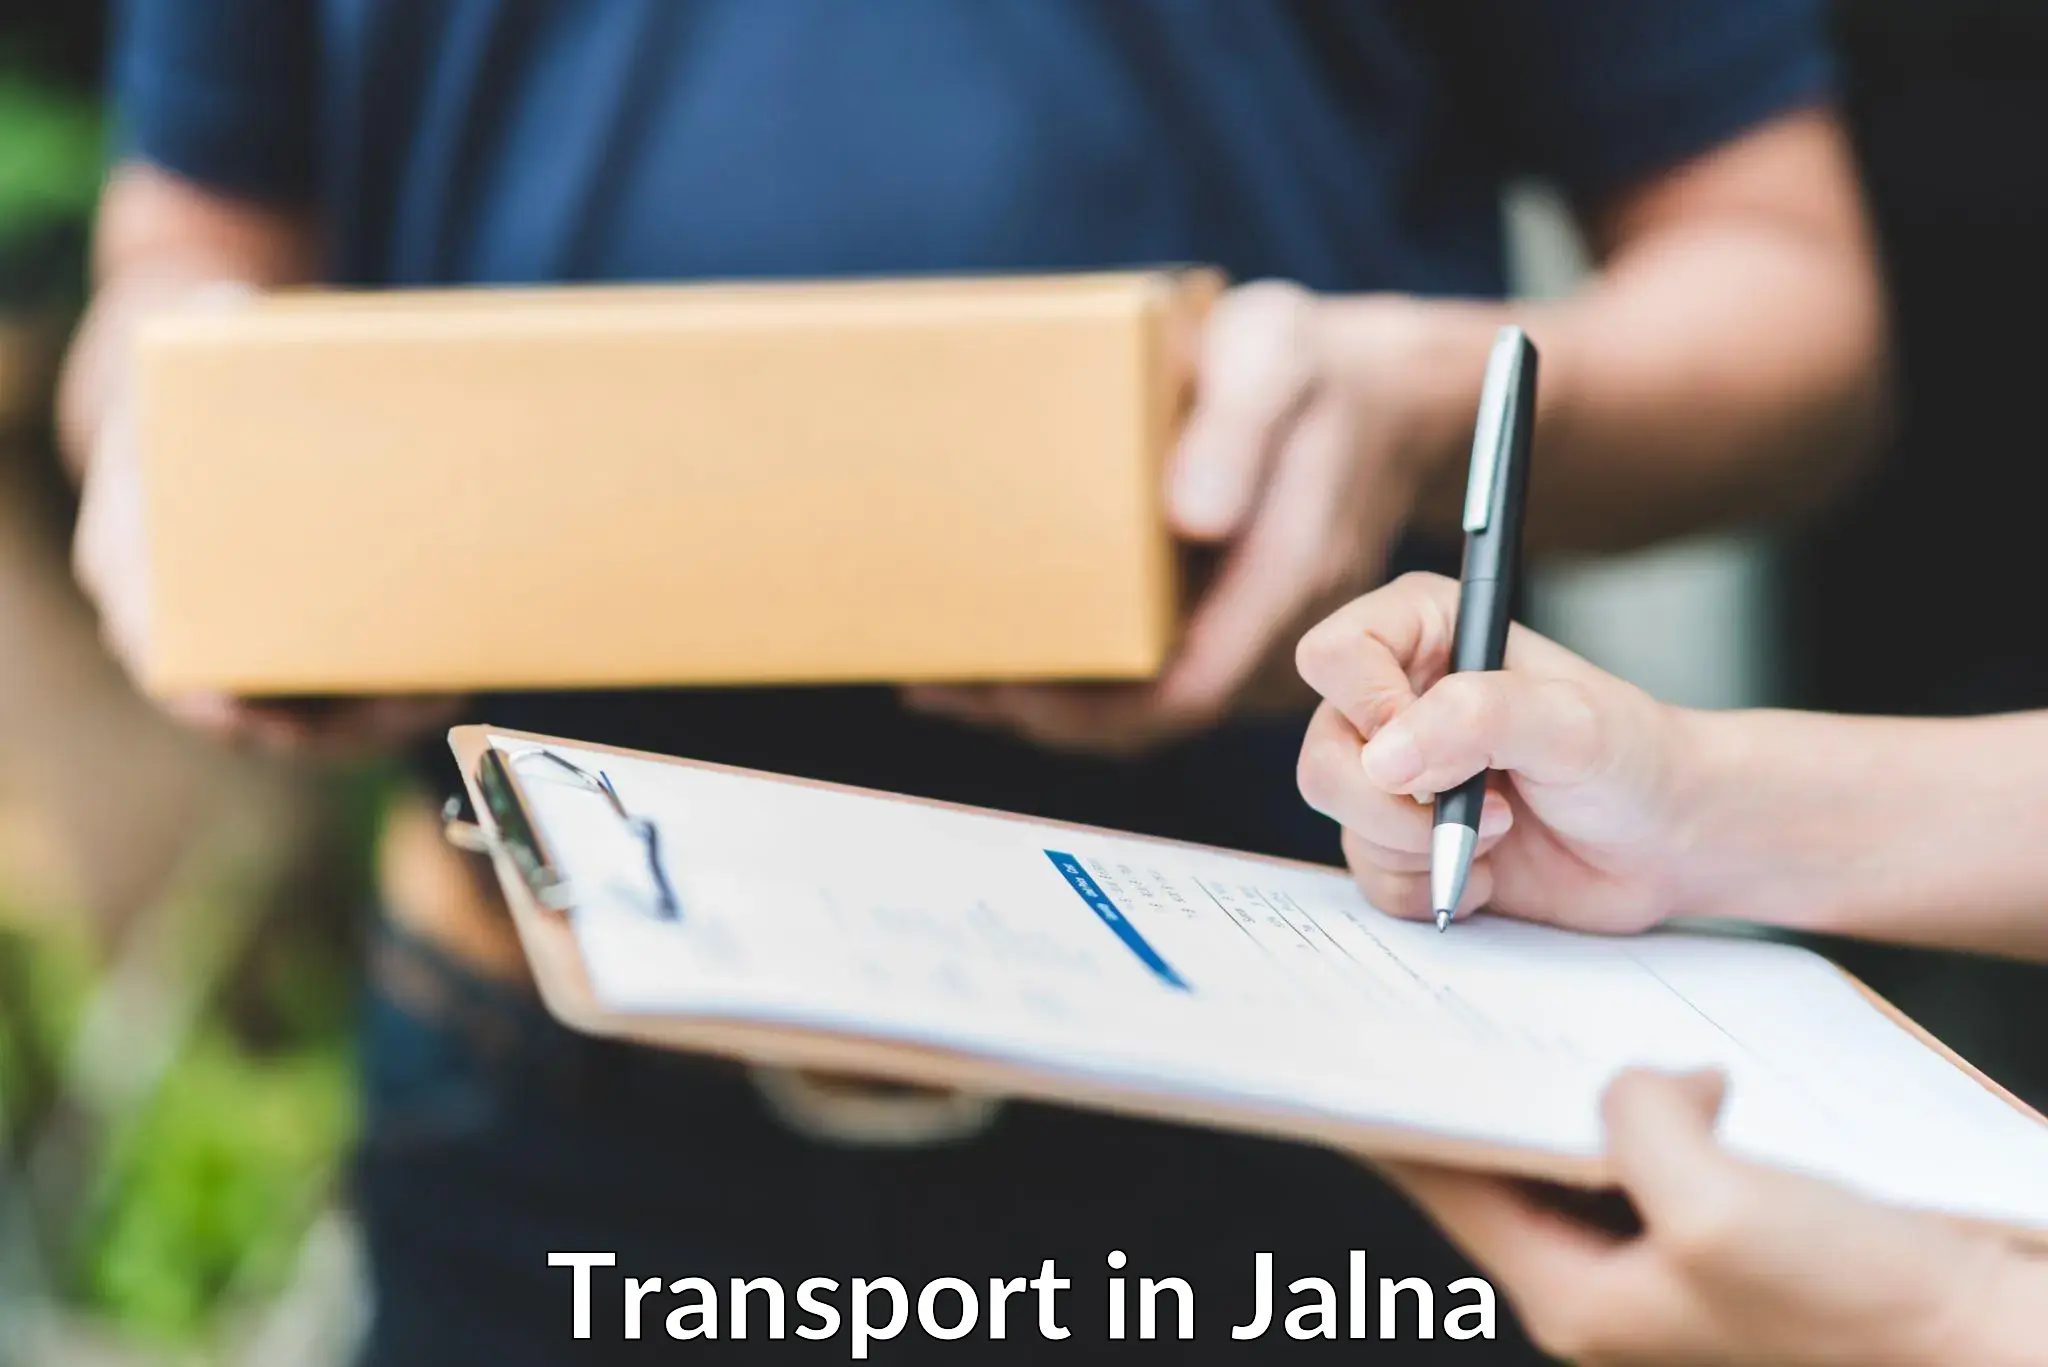 Truck transport companies in India in Jalna